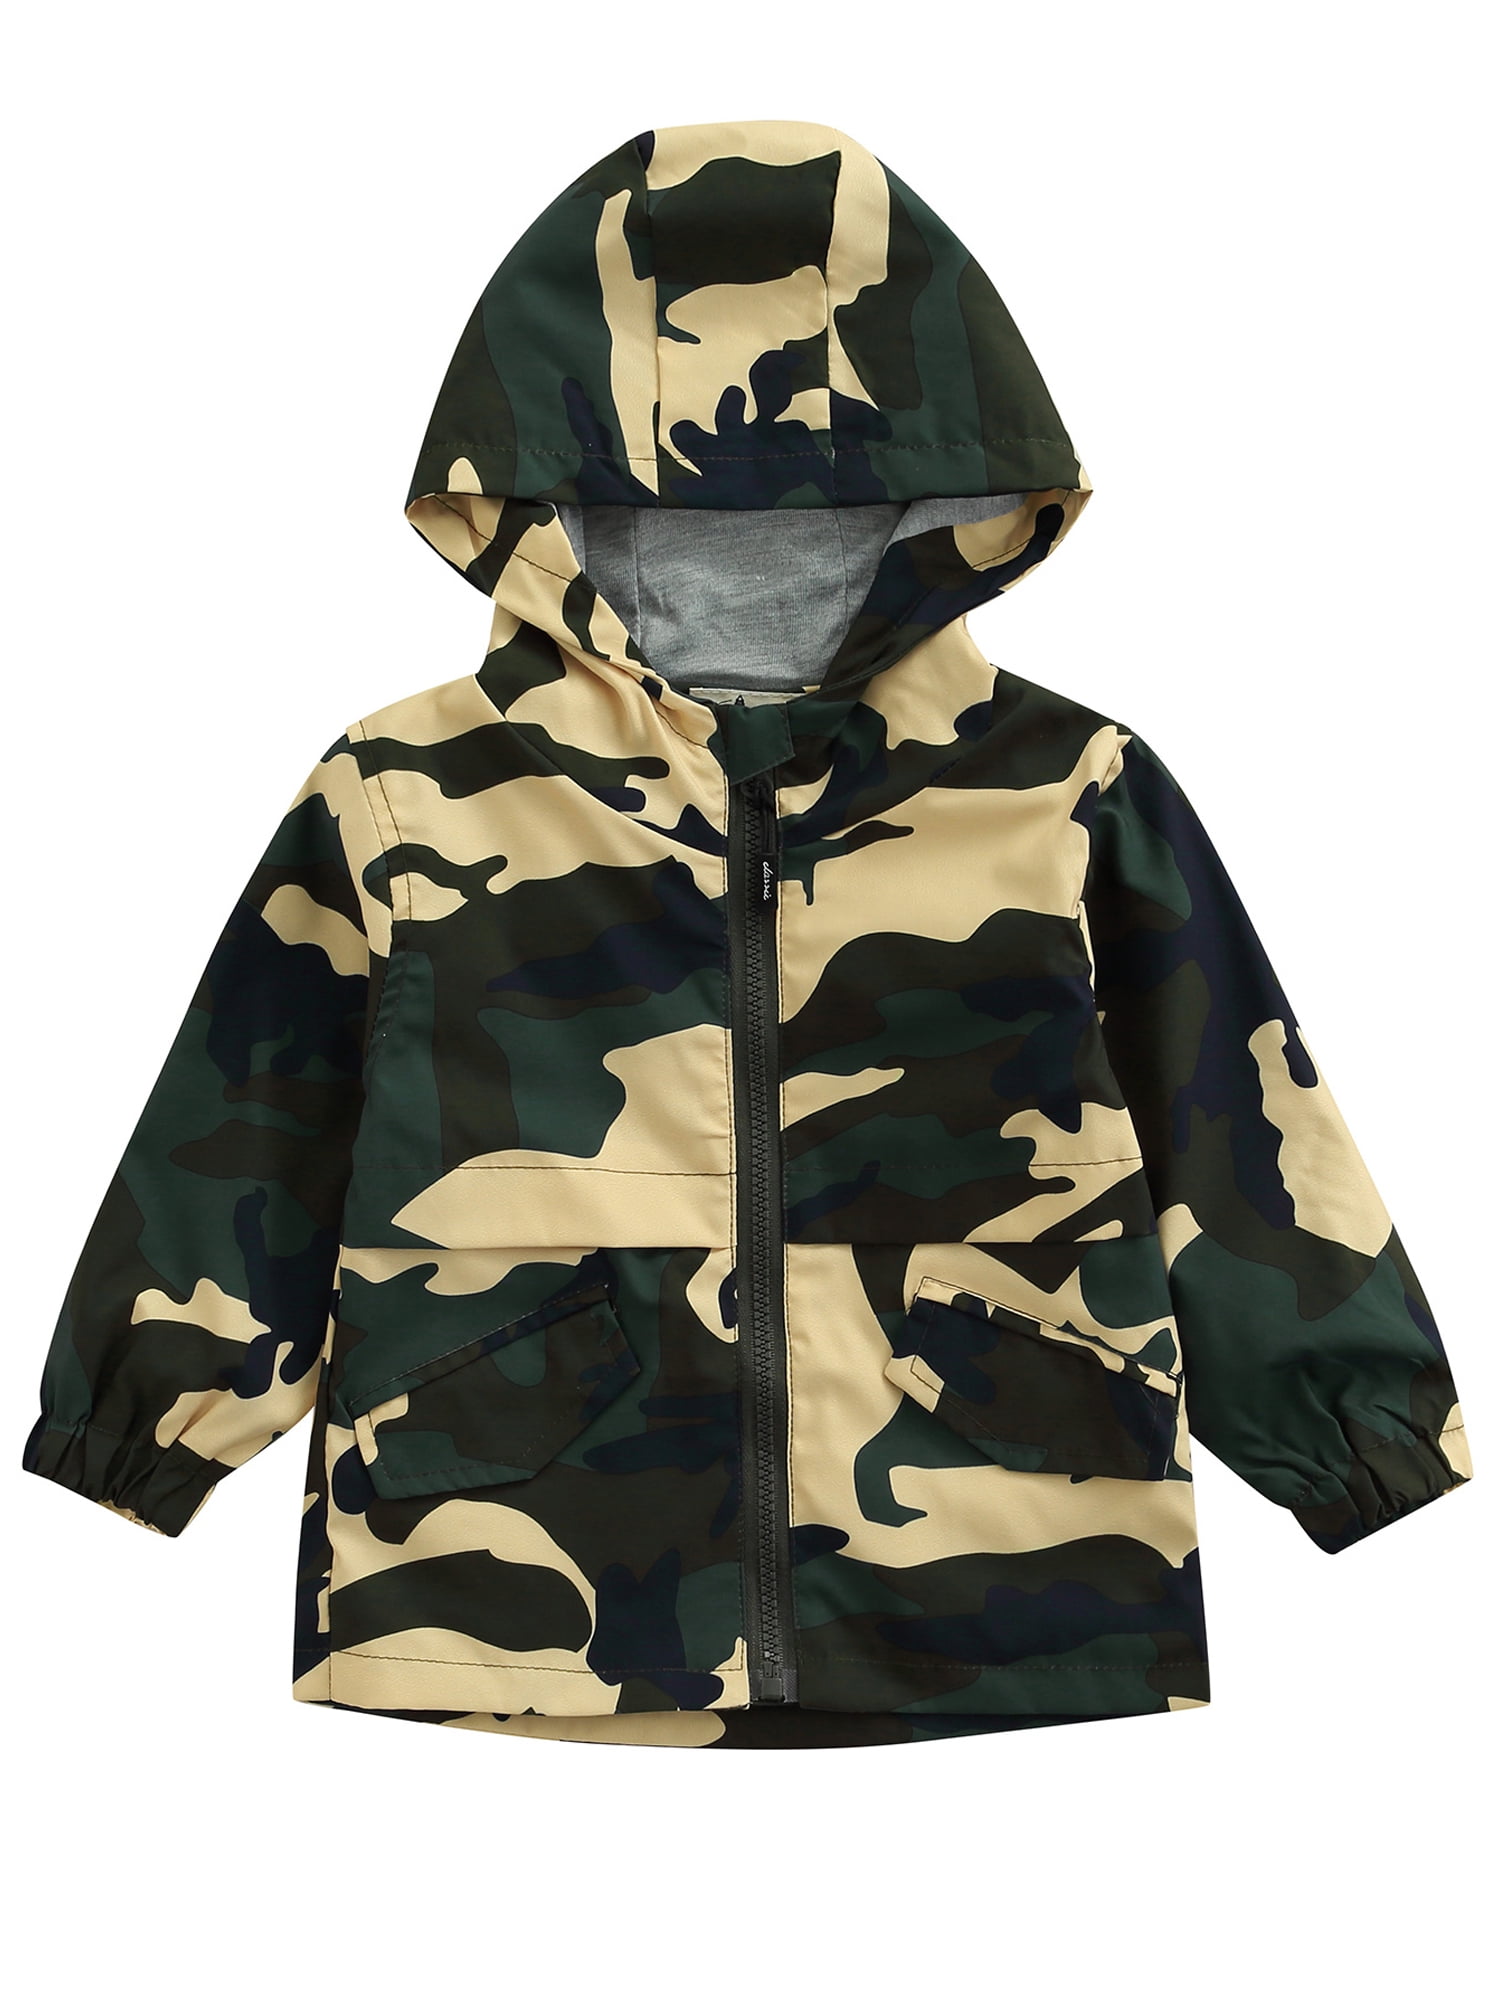 New Womens Camouflage Zip Up Parka Hooded Raincoats Showerproof Jackets 18-24 